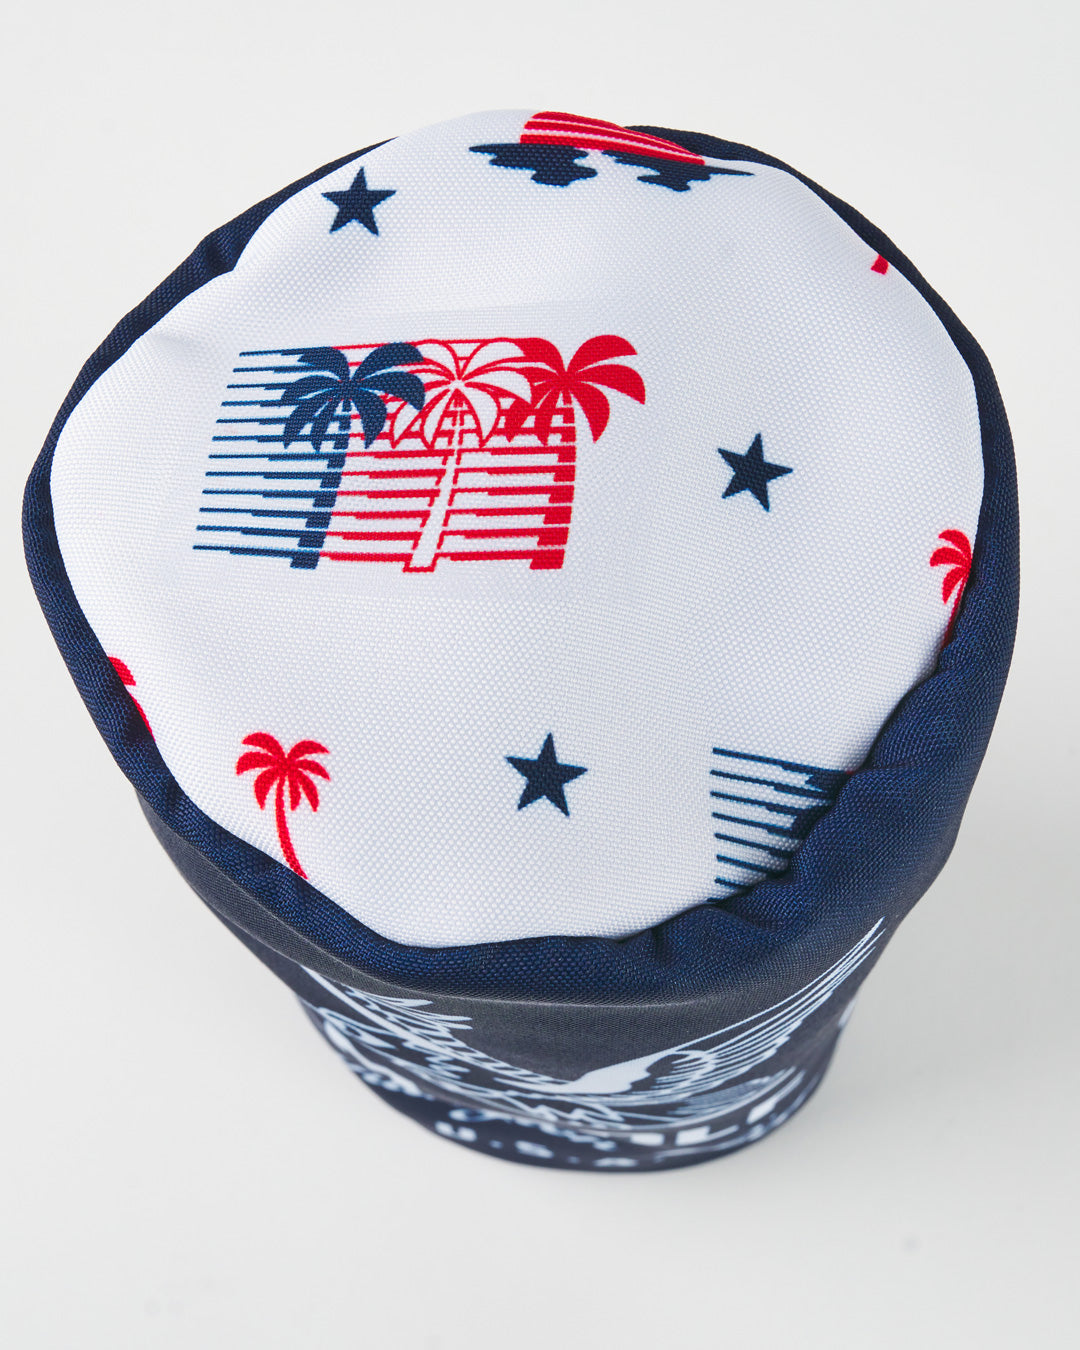 Soarin' Headcover - Palm Golf Co.